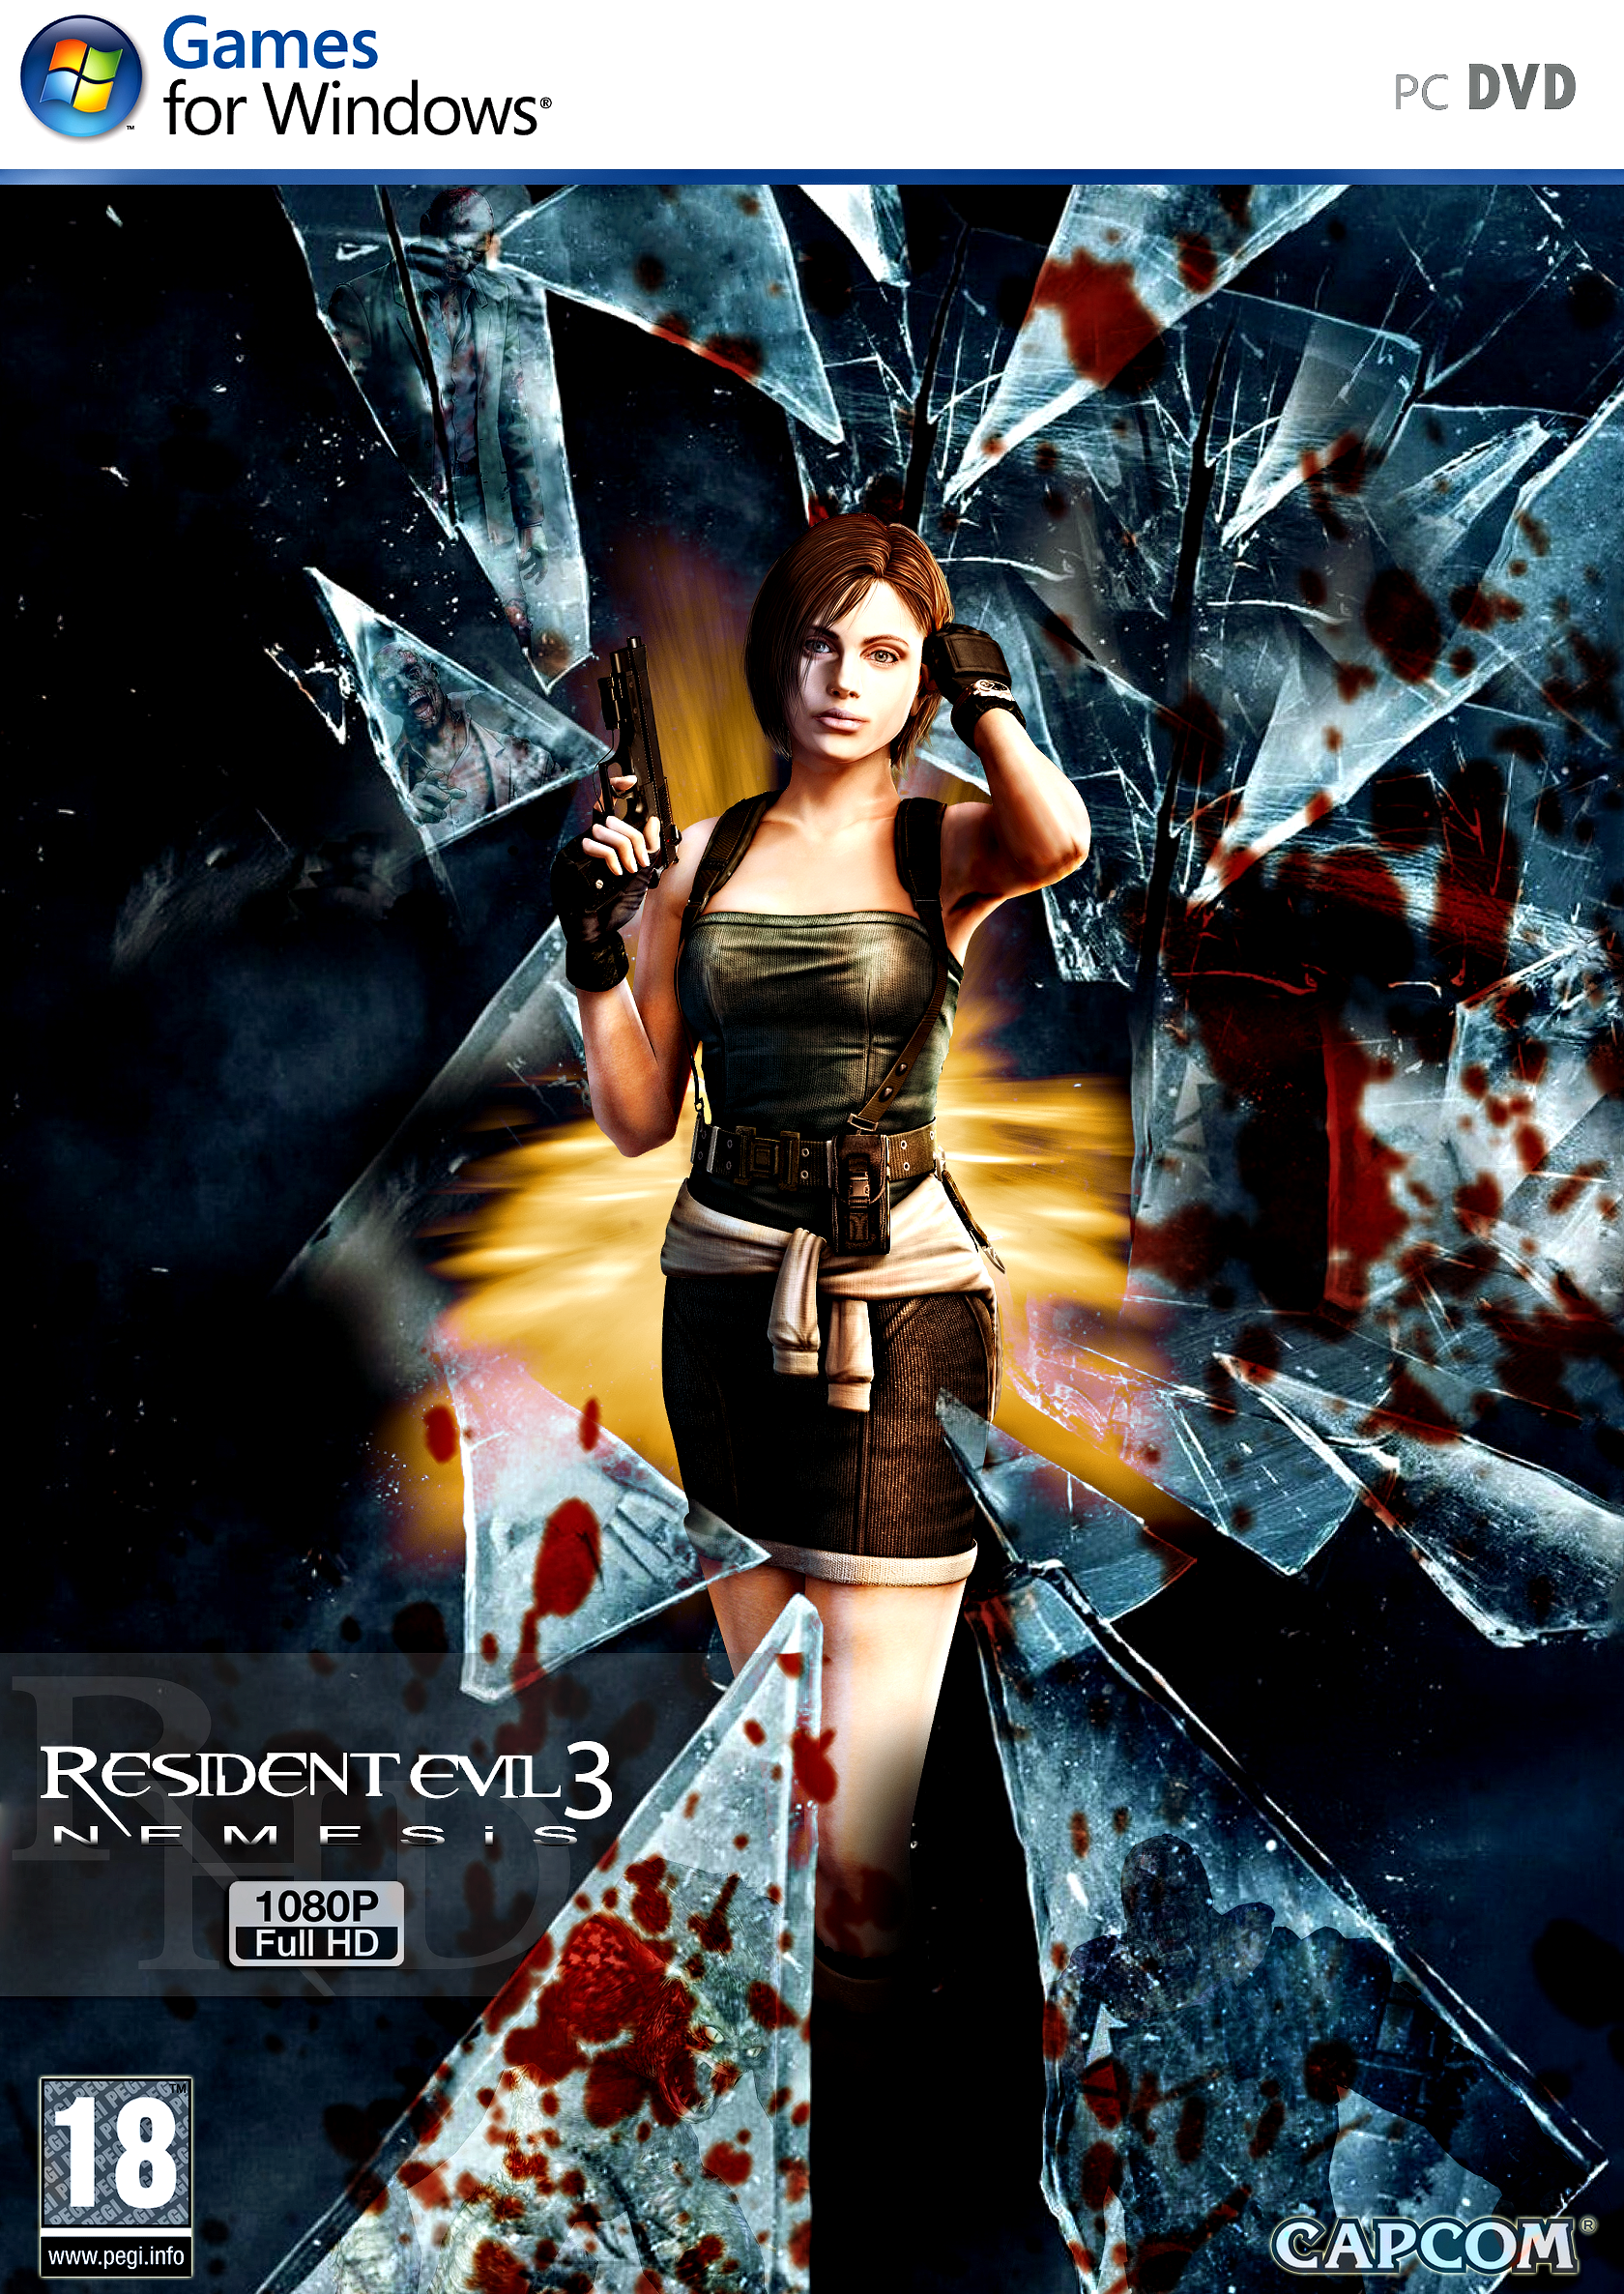 Resident Evil 3 Pc Hd Cover By Jokerxax316 On Deviantart